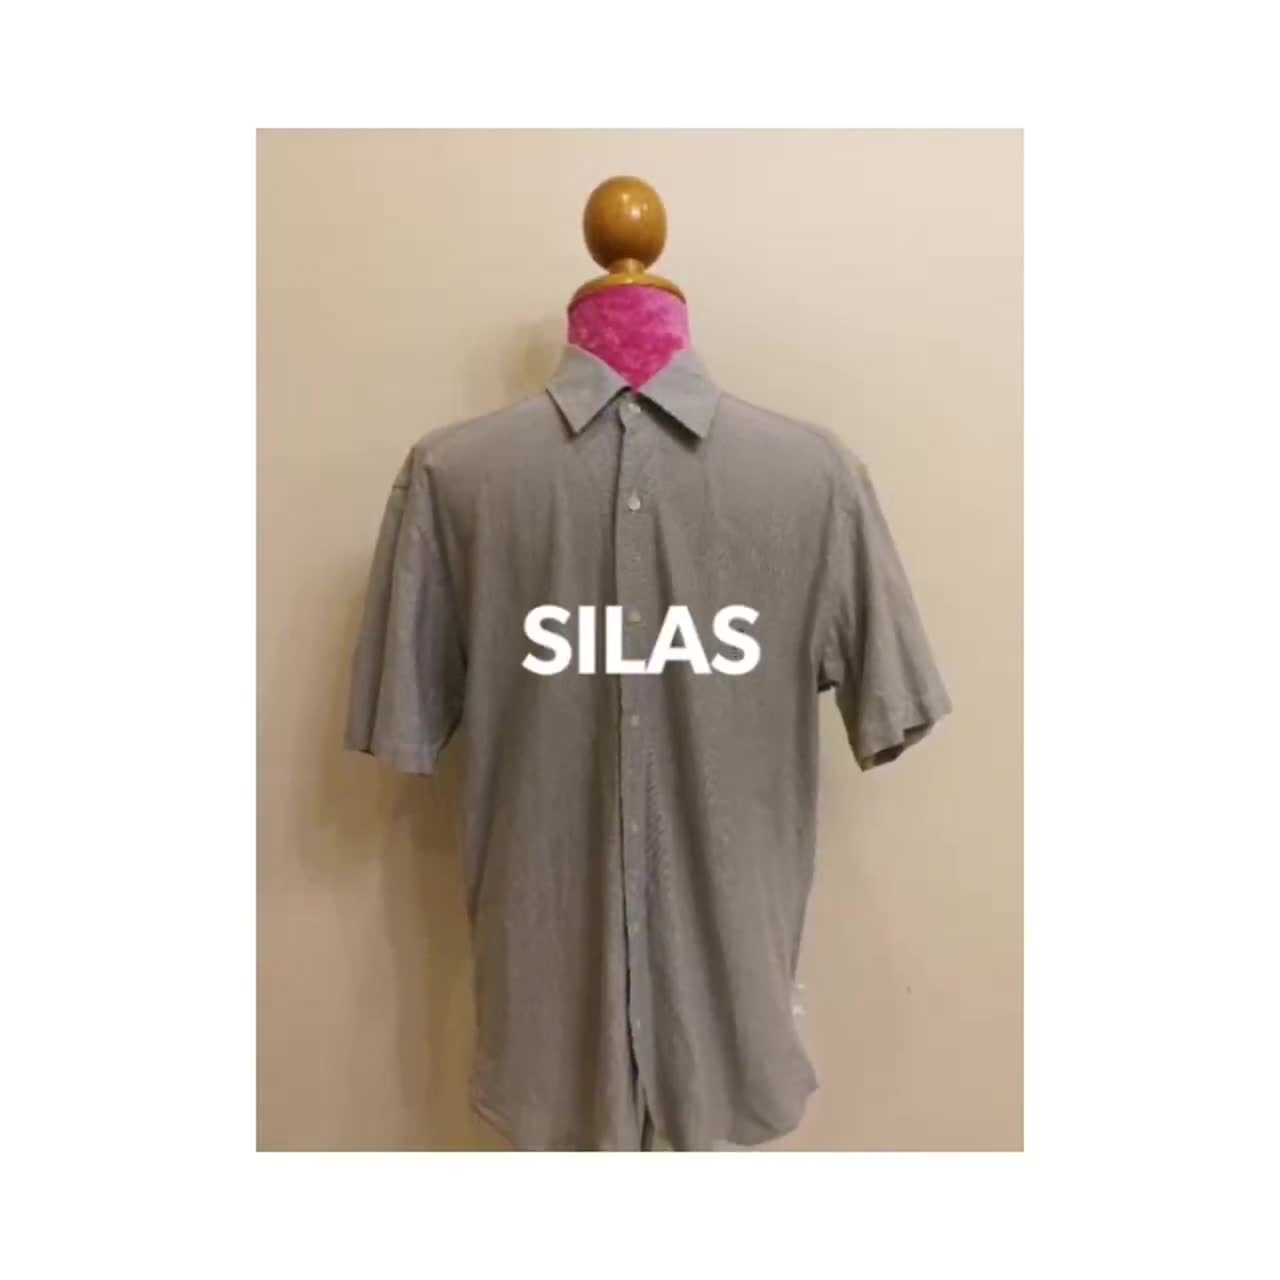 silas-brand-2nd-hand-เสื้อเชิ้ตแขนสั้นผ้าฝ้าย-100-size-m-made-in-portugal-แท้มือสองกระสอบนำเข้า